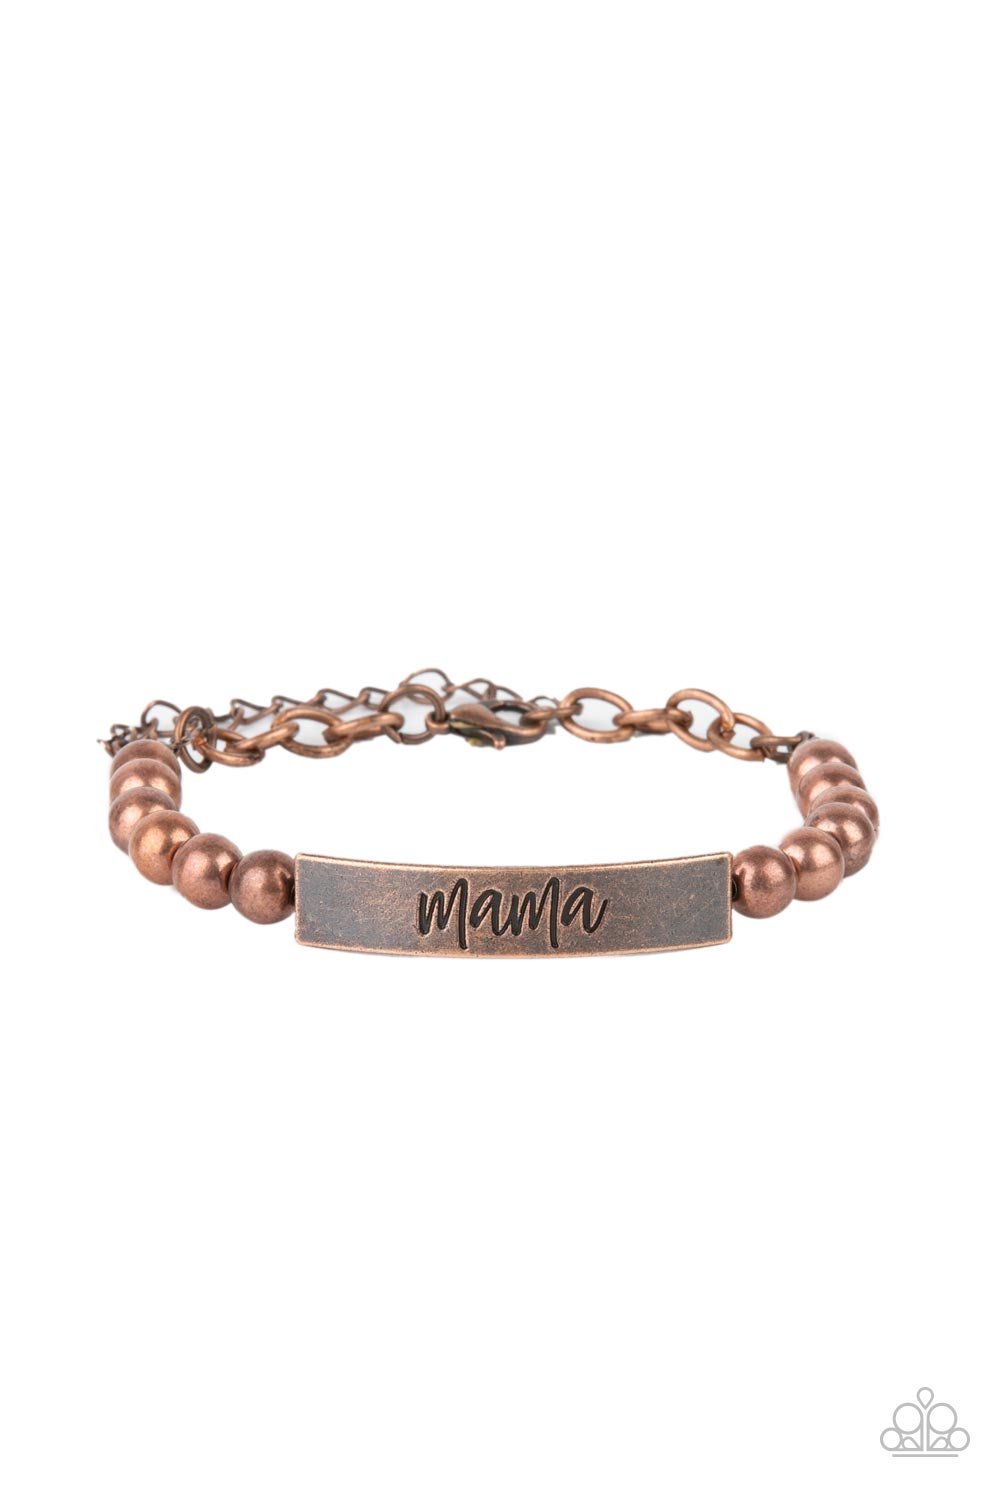 Mom Squad Copper Inspirational Bracelet - Paparazzi Accessories- lightbox - CarasShop.com - $5 Jewelry by Cara Jewels